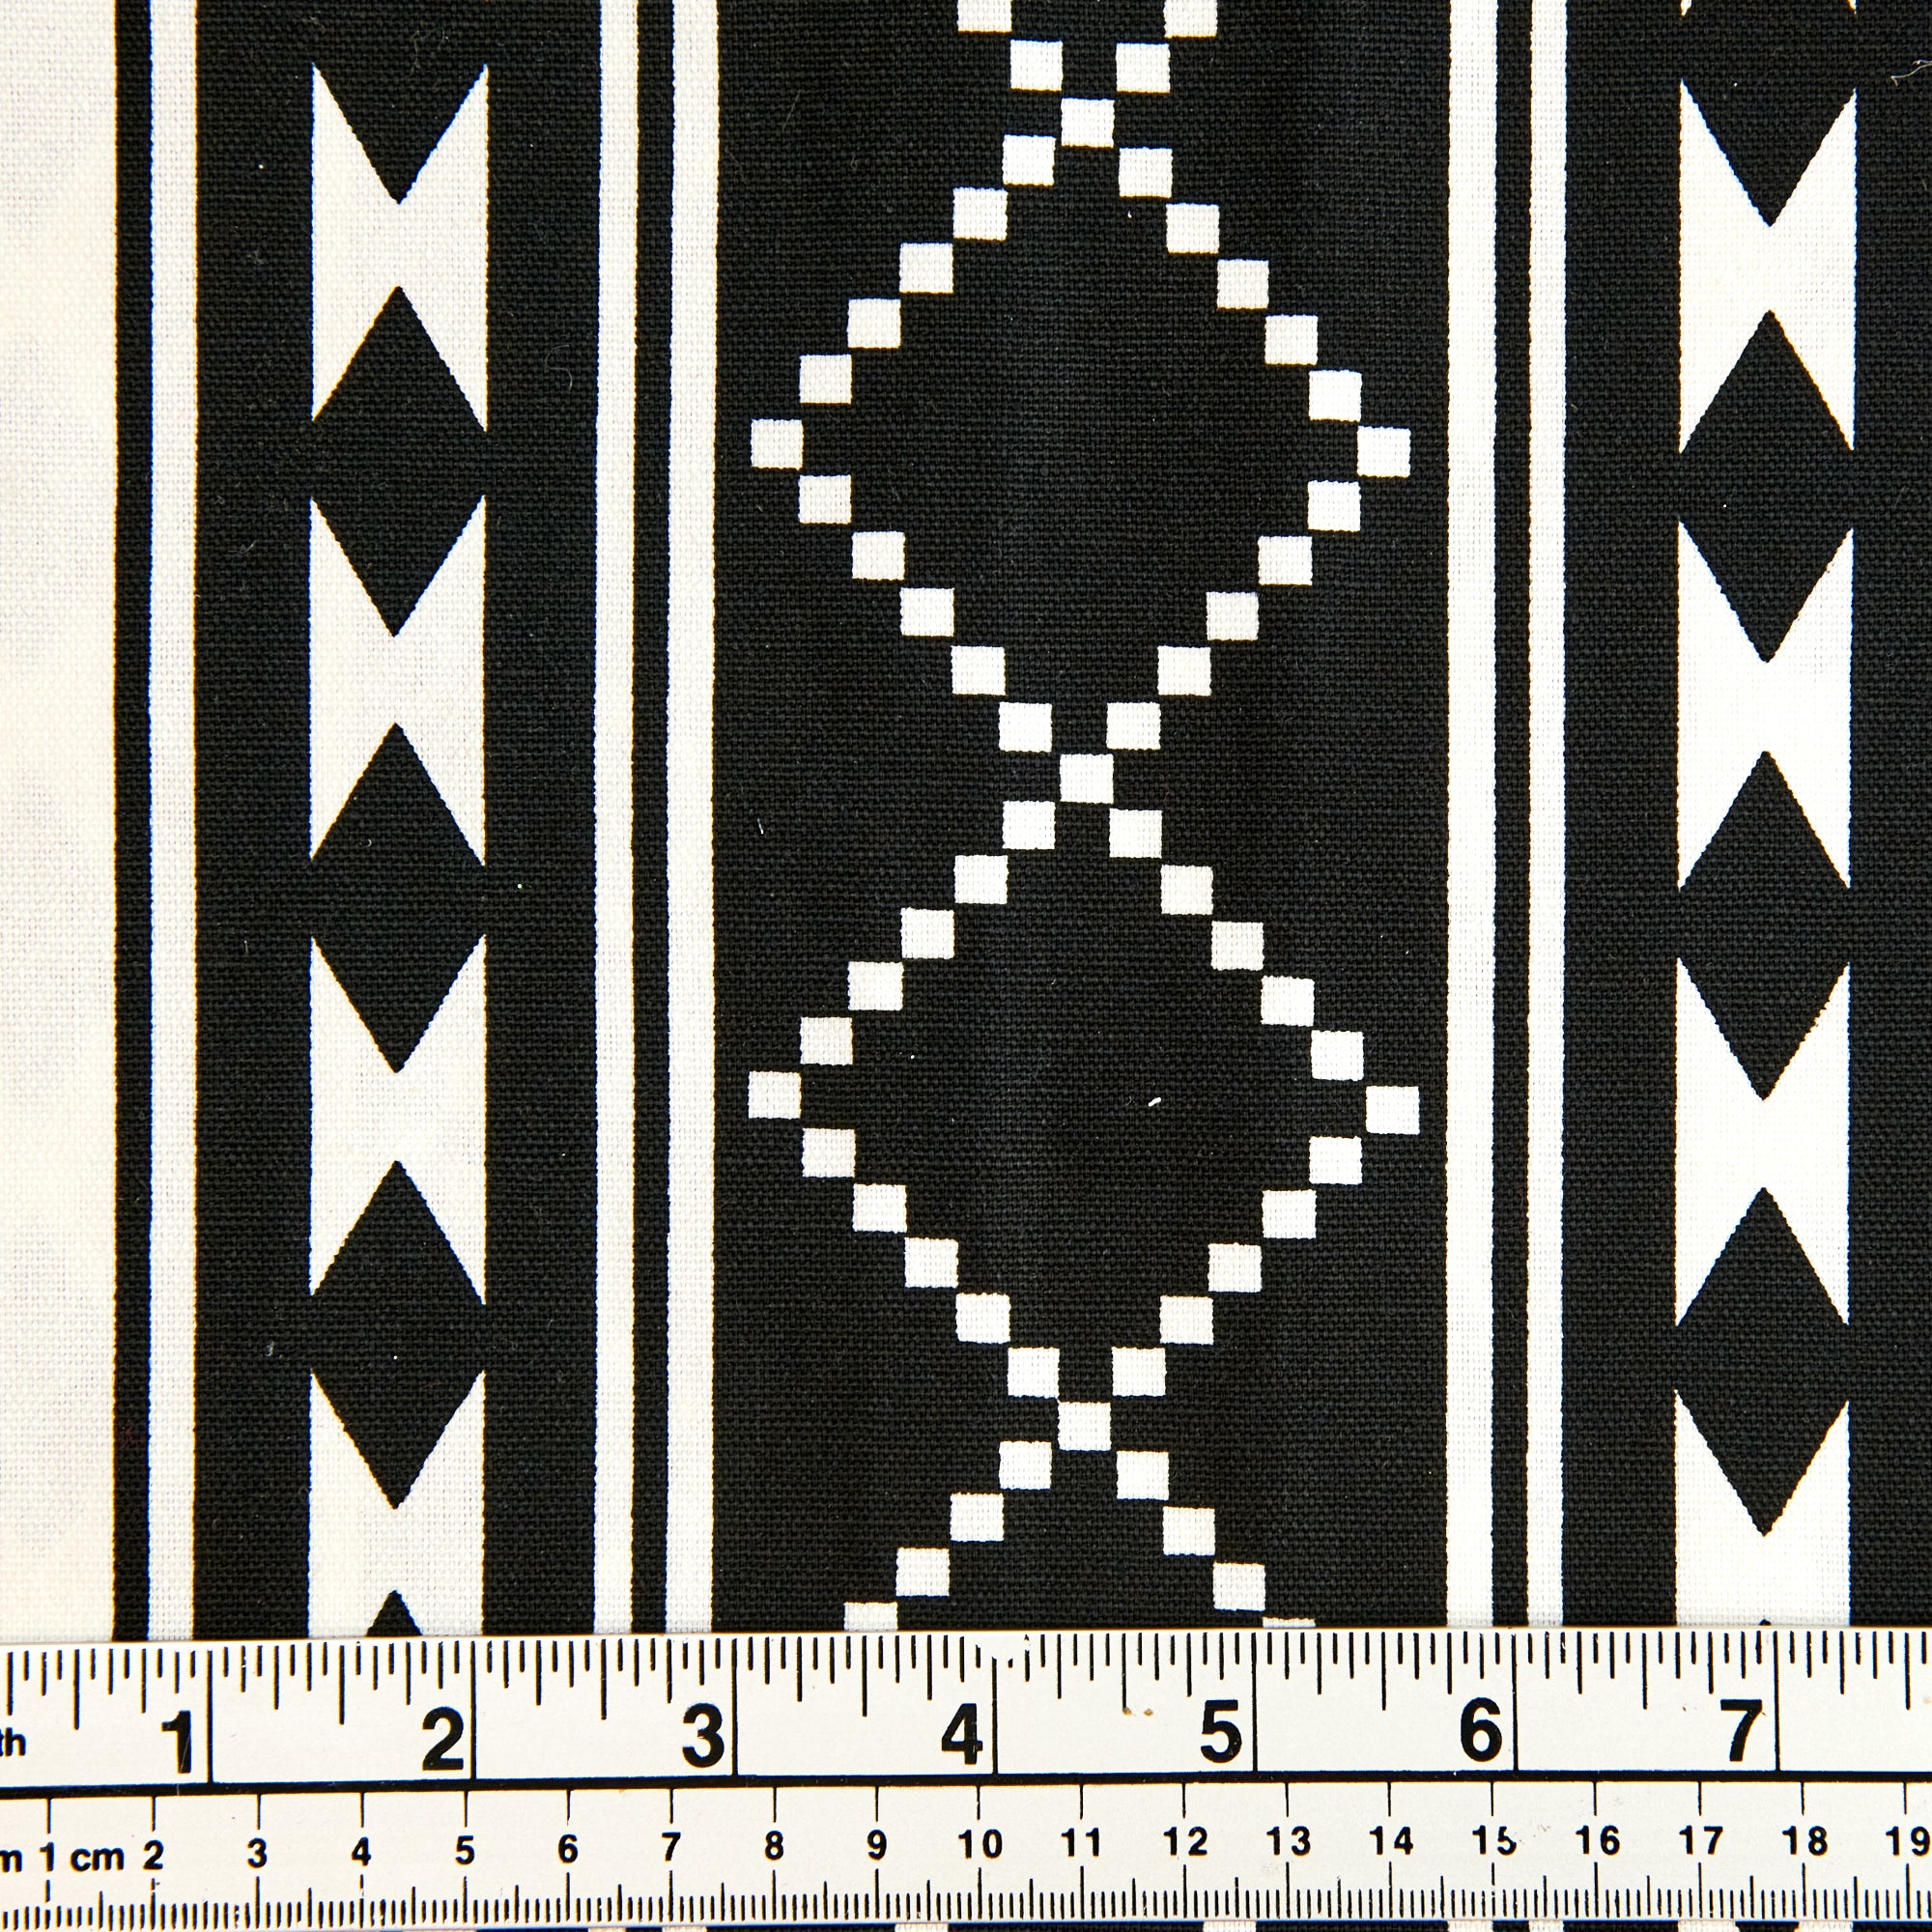 Charcoal and Black Tie Dye Print Stretch Jersey Knit